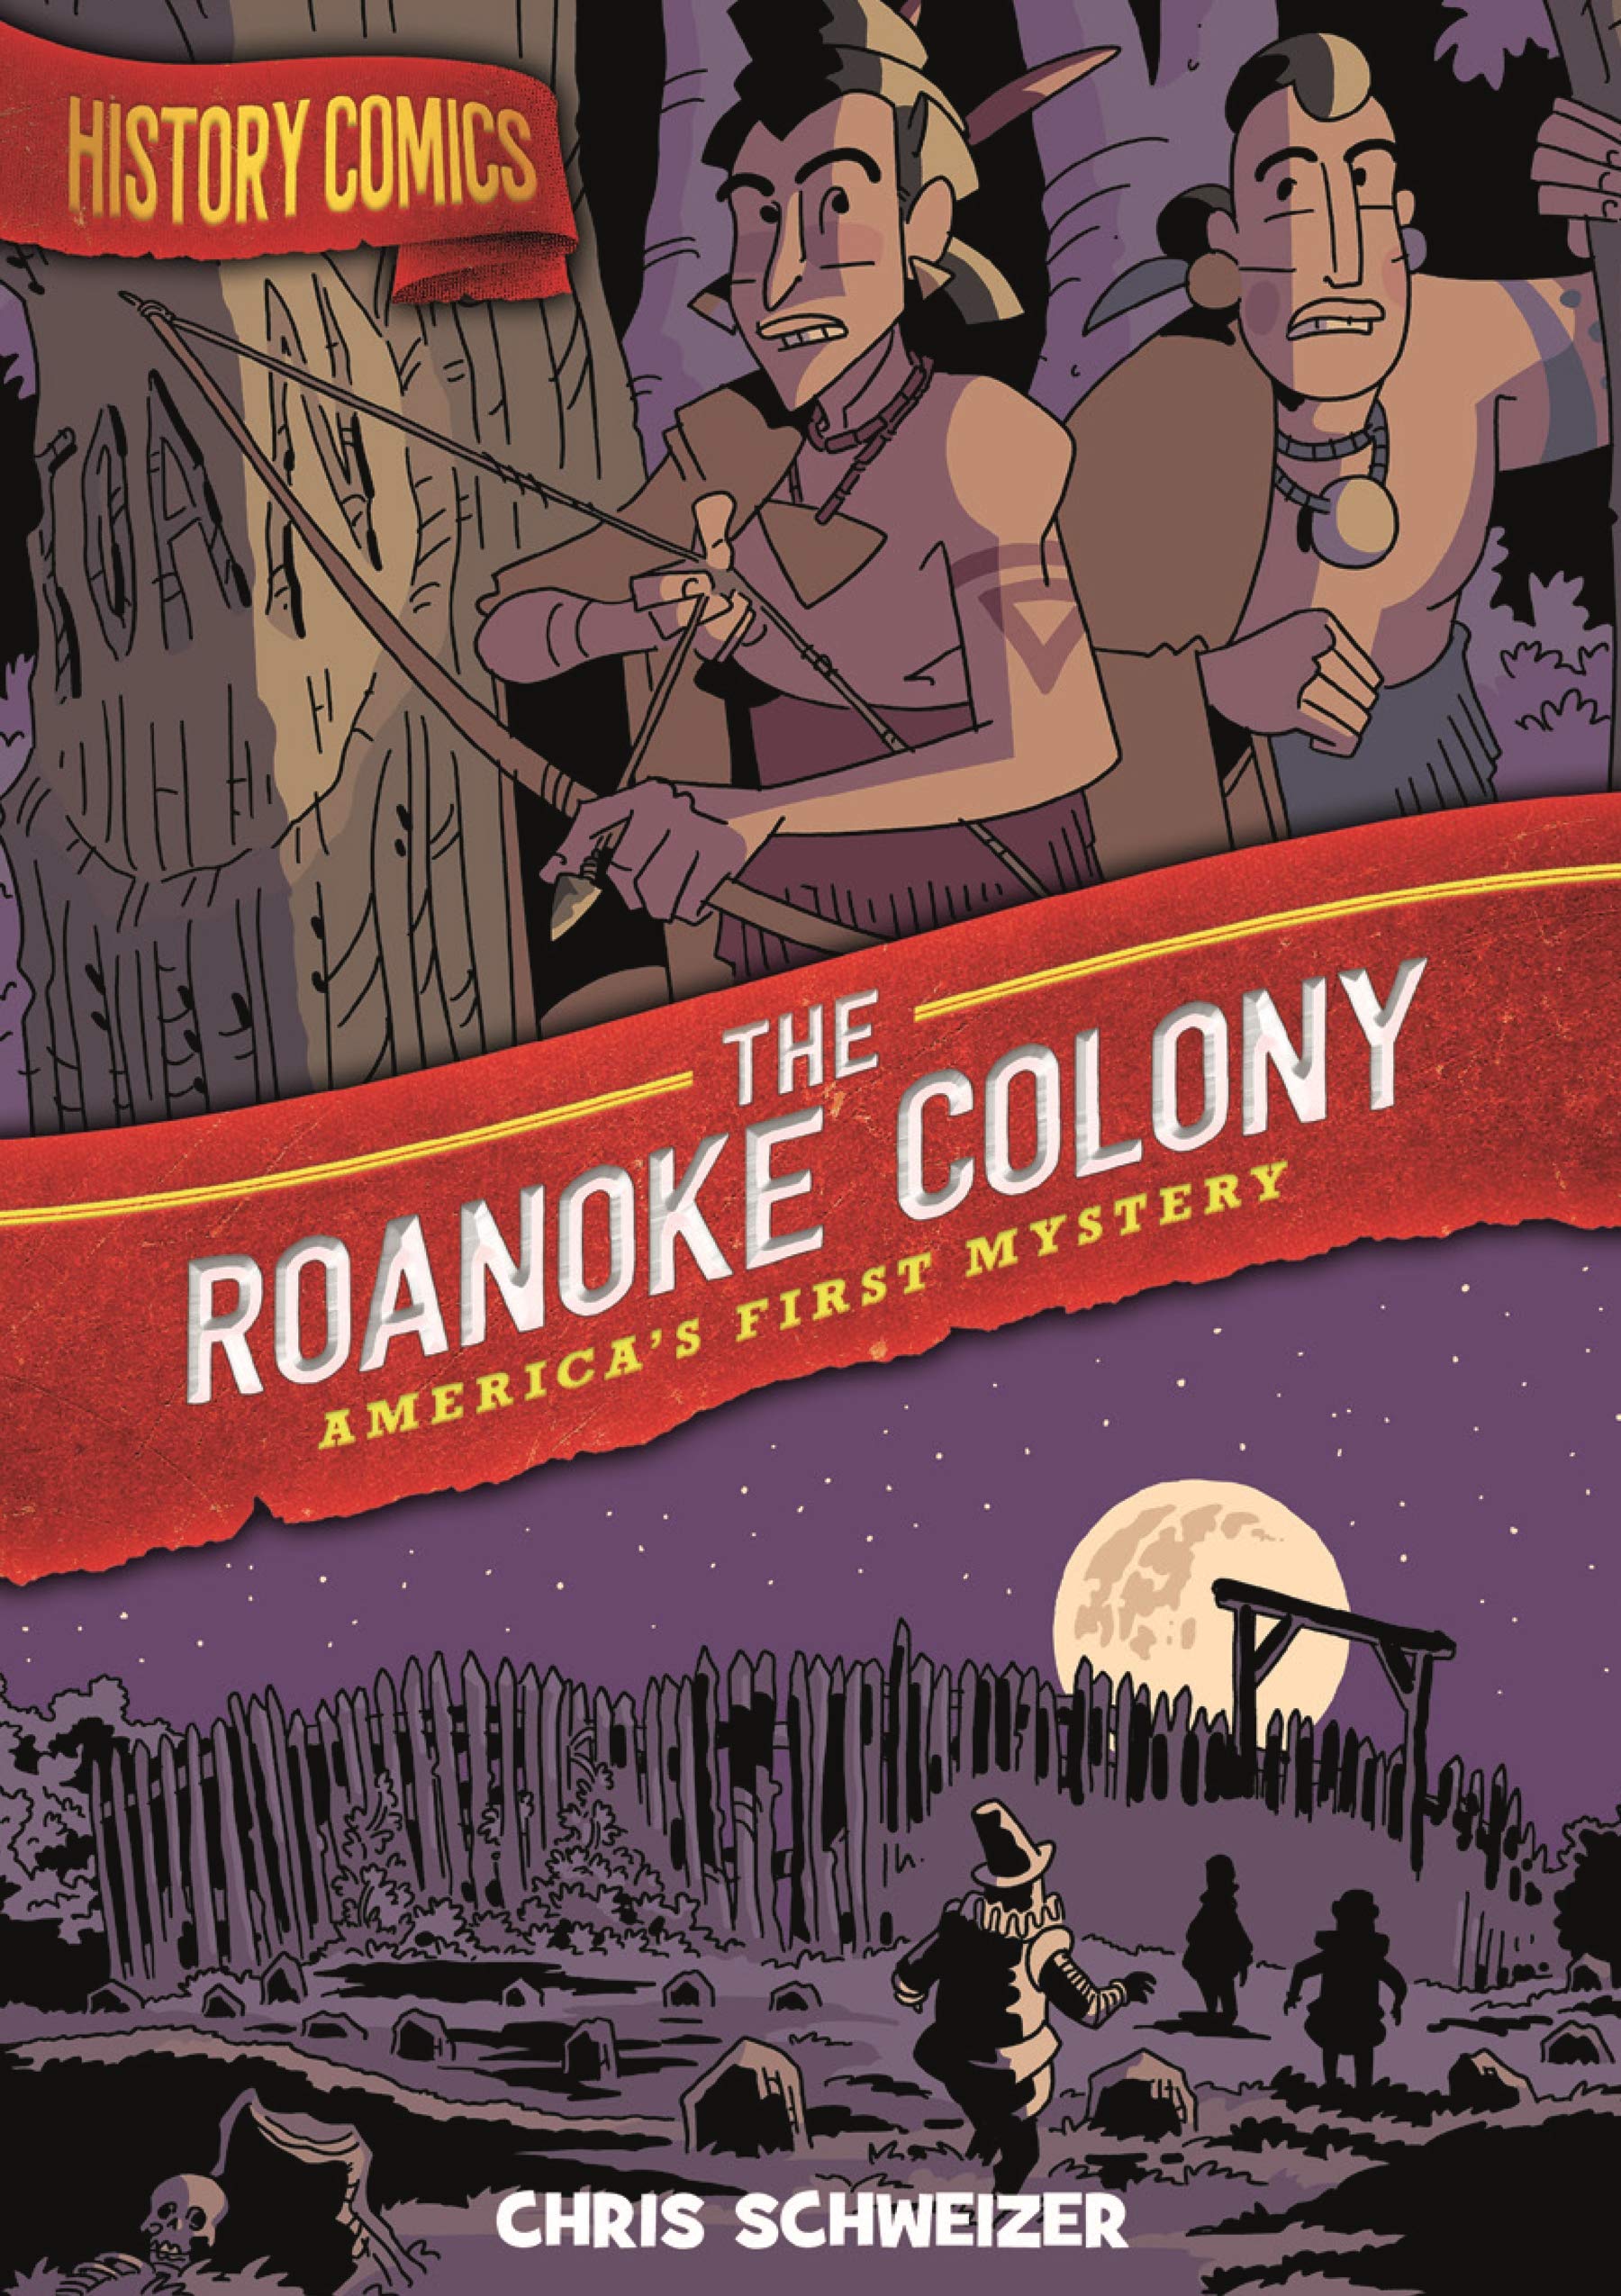 History Comics: The Roanoke Colony | Review